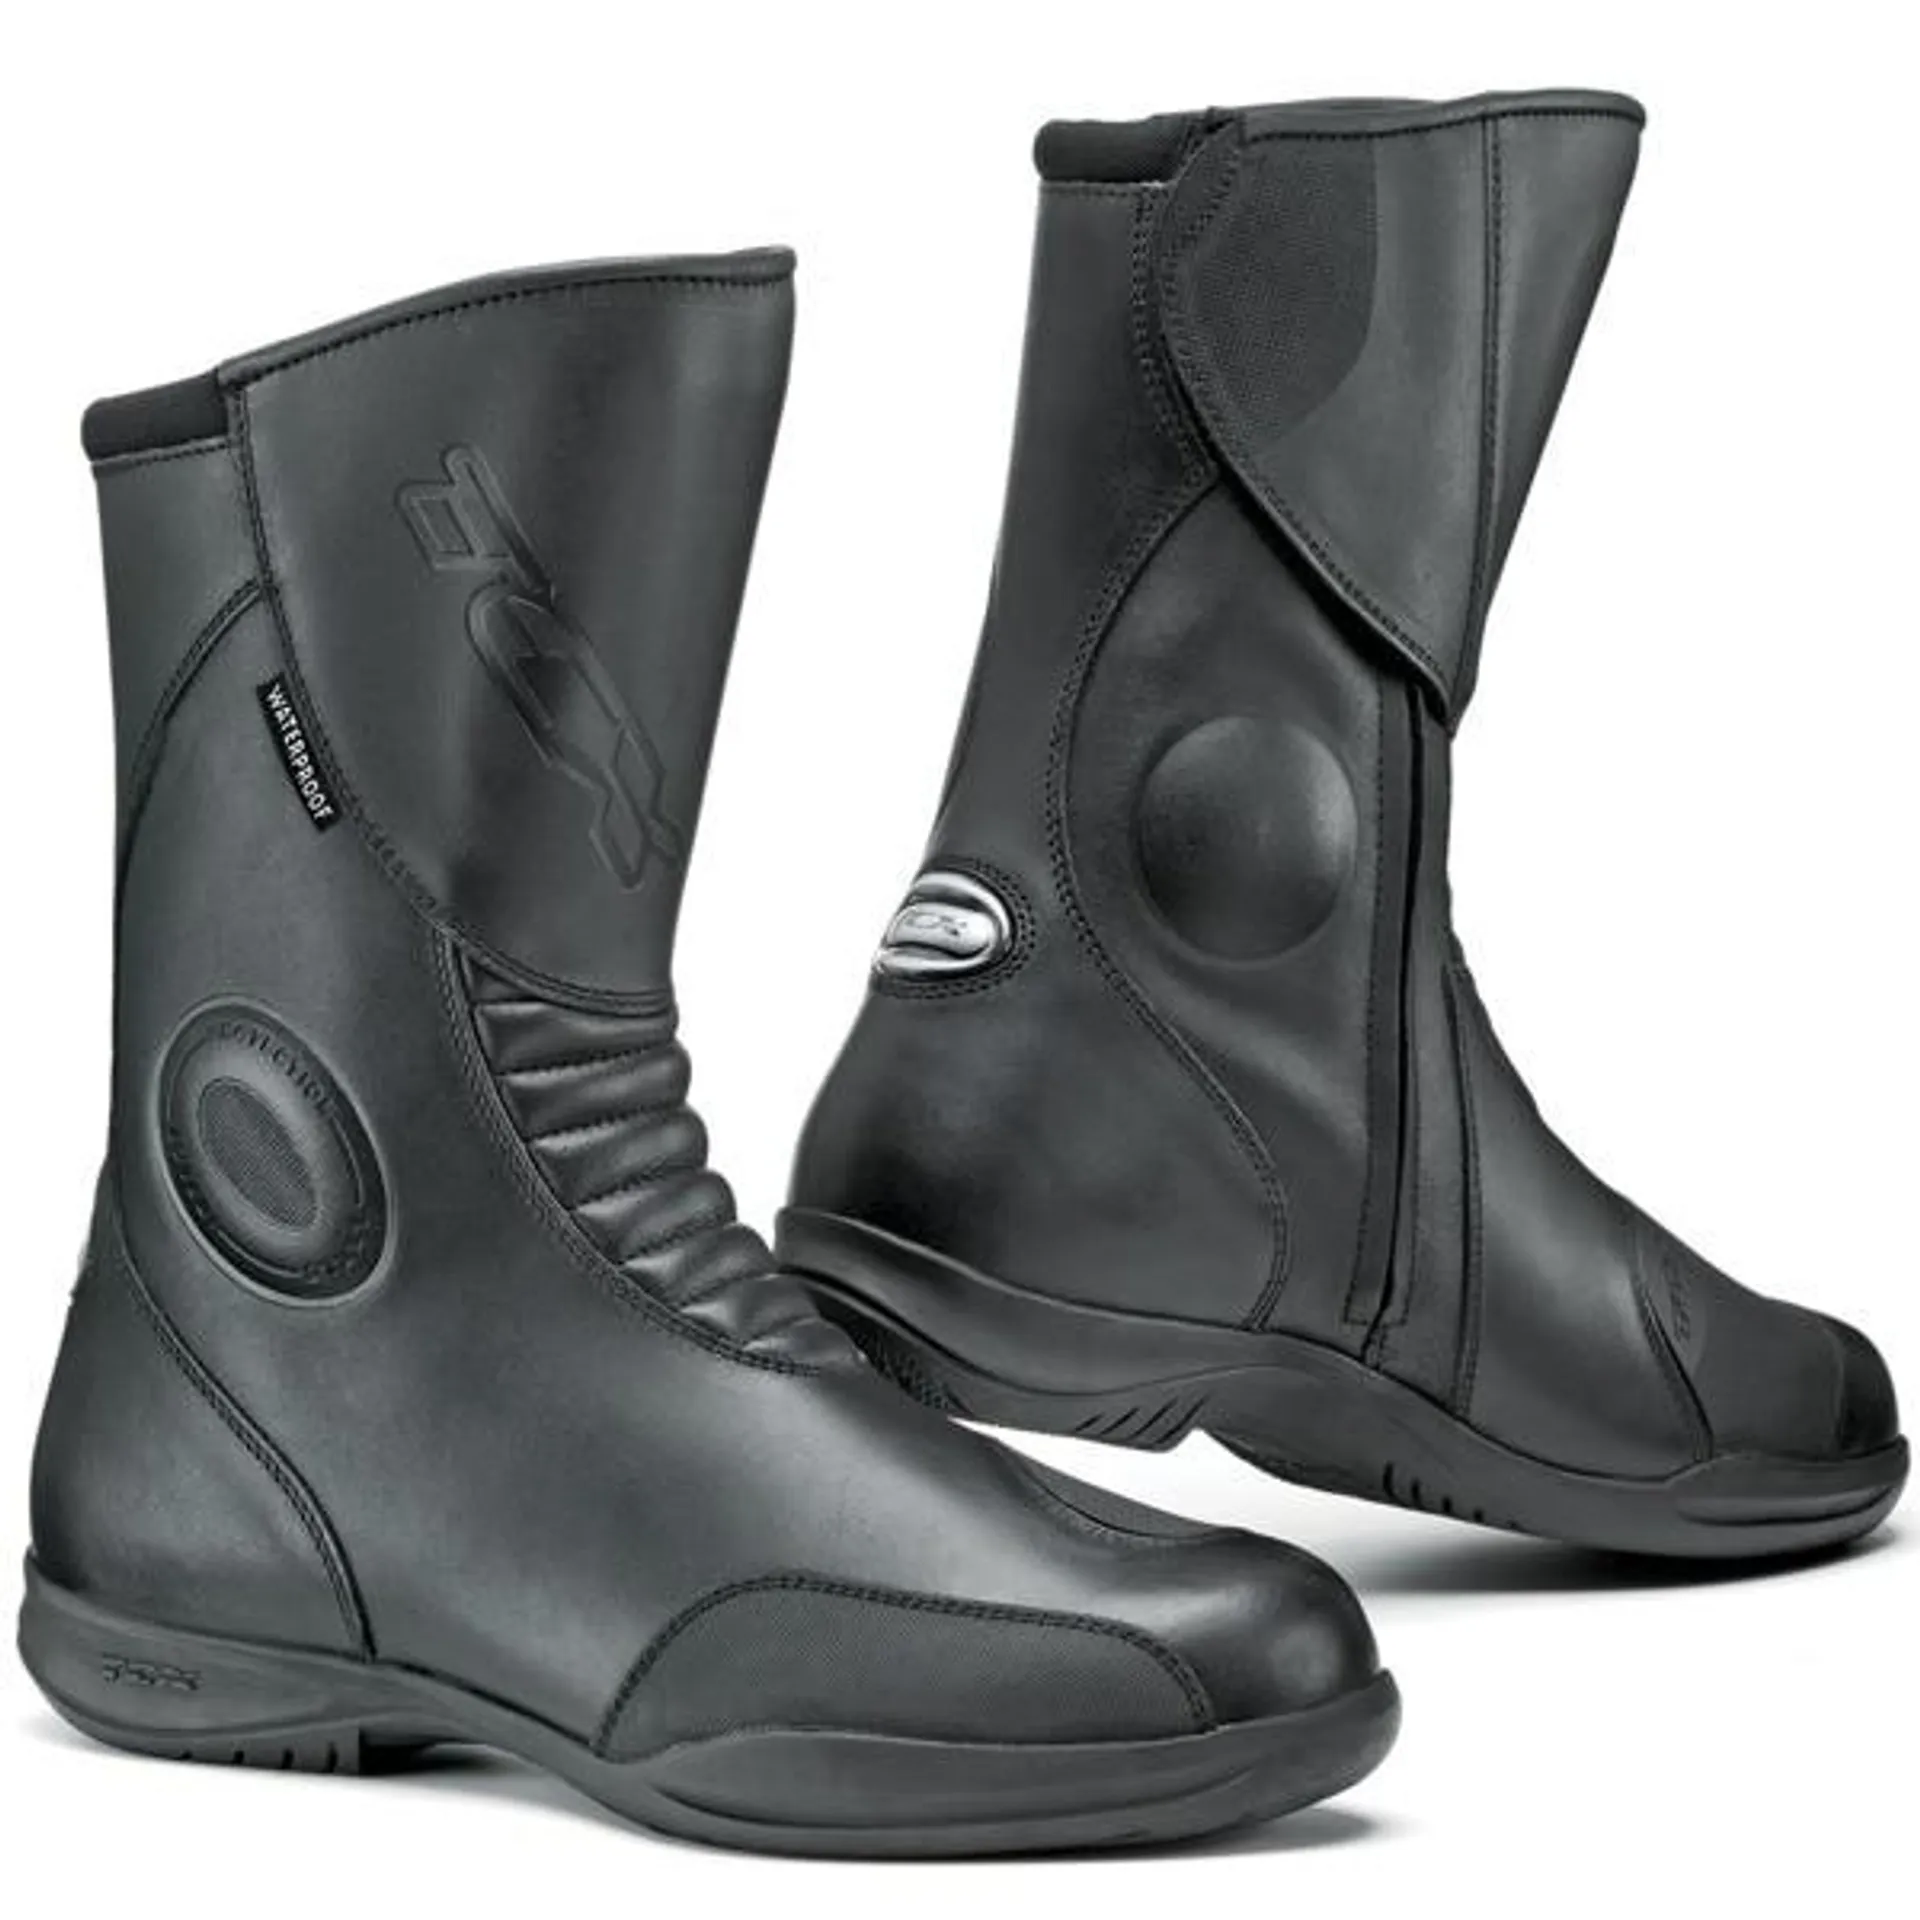 TCX X-Five Waterproof Boots - Black